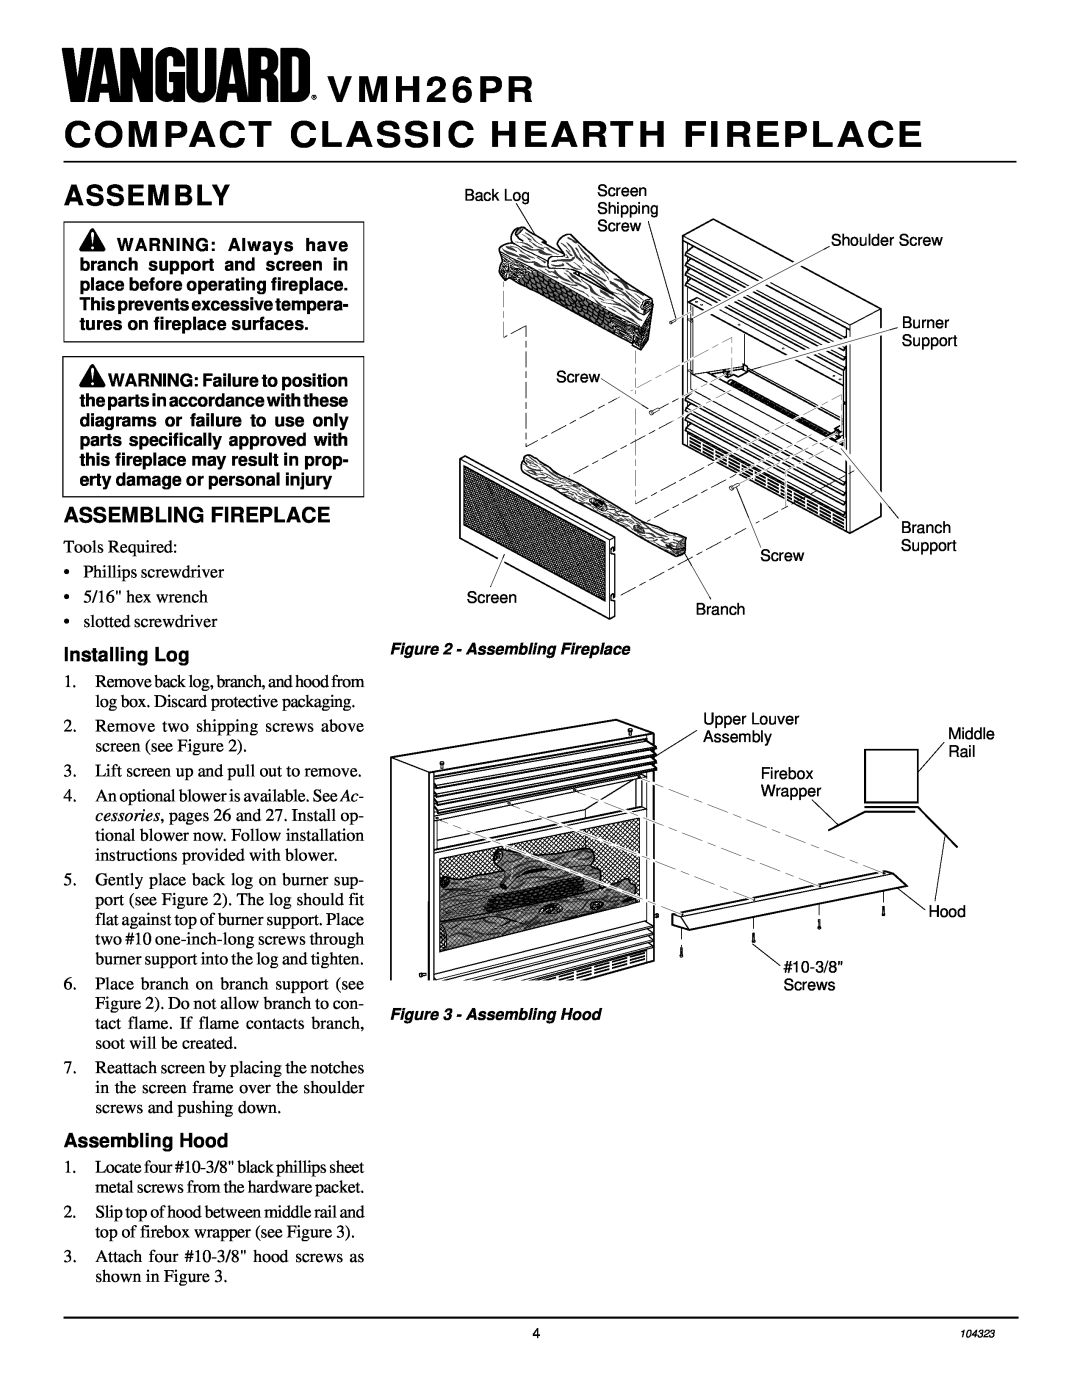 Desa Assembly, Assembling Fireplace, Installing Log, Assembling Hood, VMH26PR COMPACT CLASSIC HEARTH FIREPLACE 